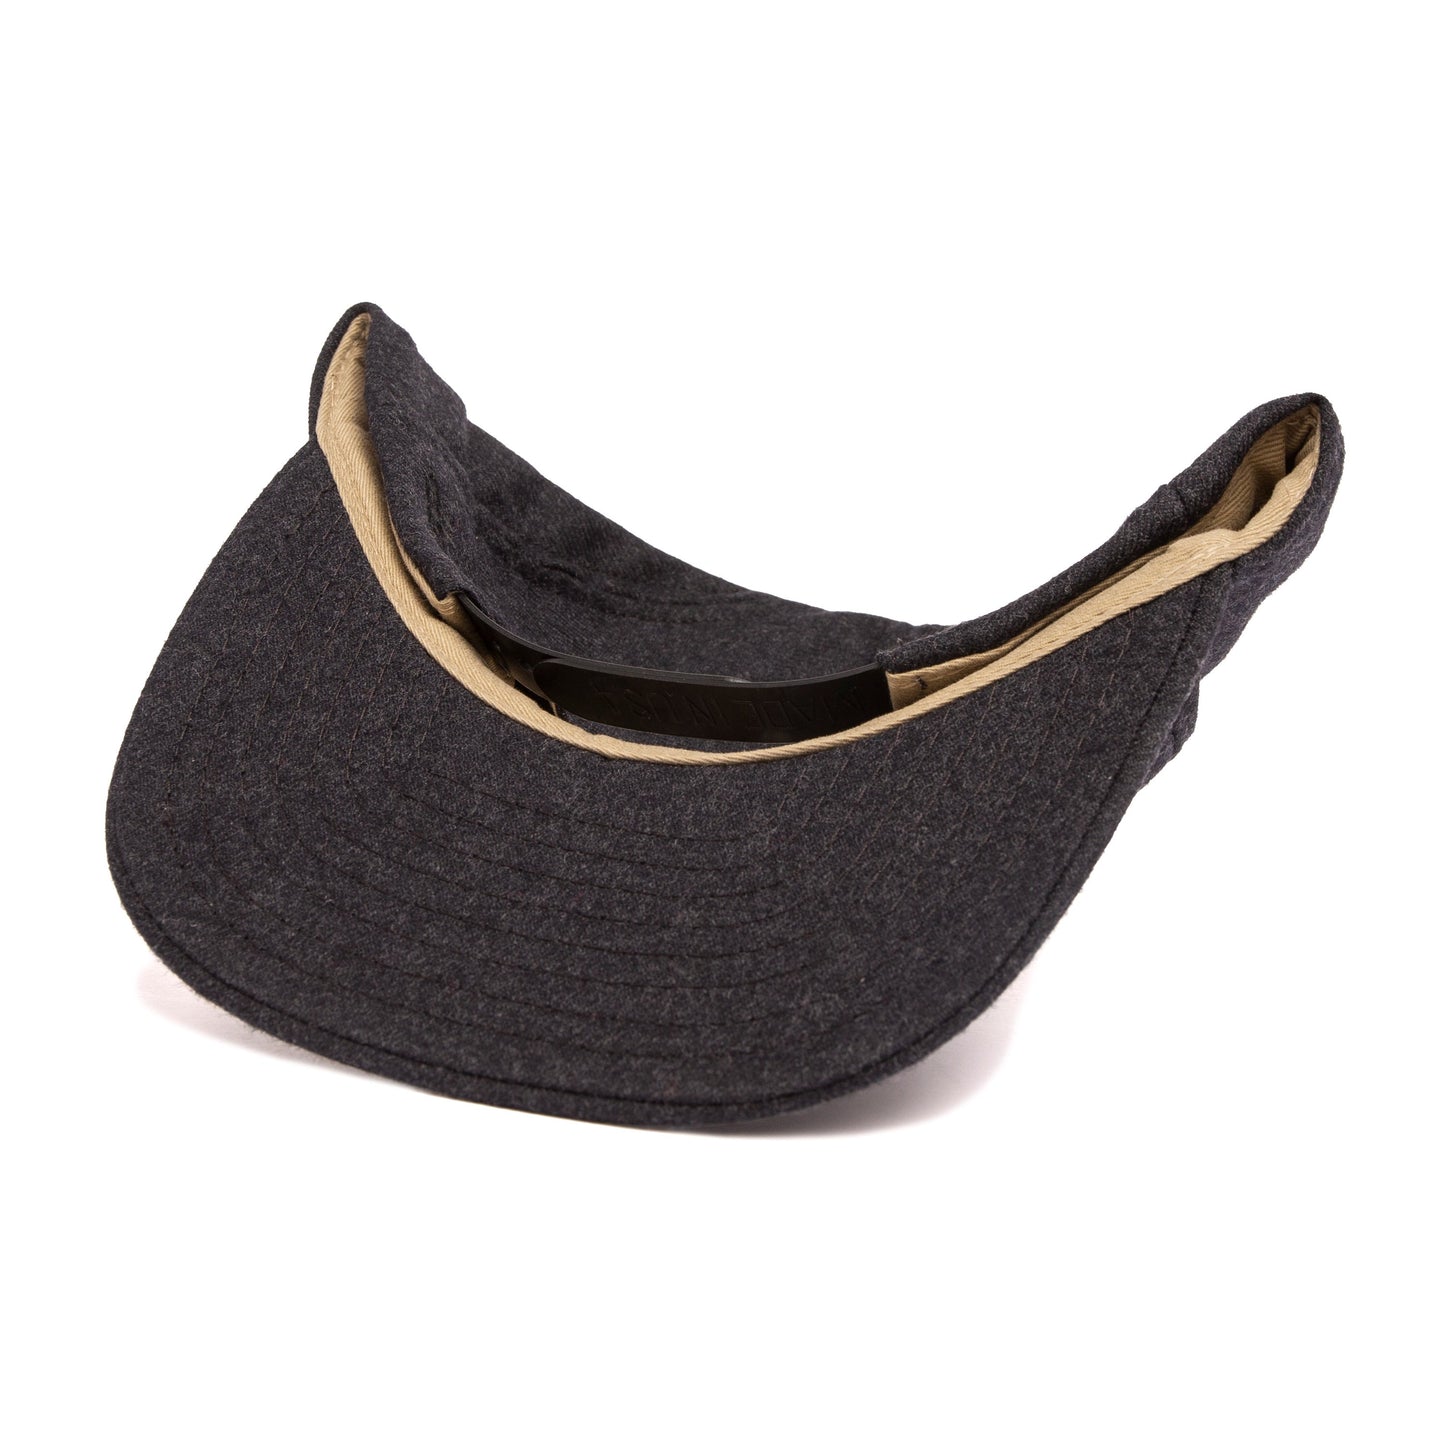 Bed Stuy Snapback Hat